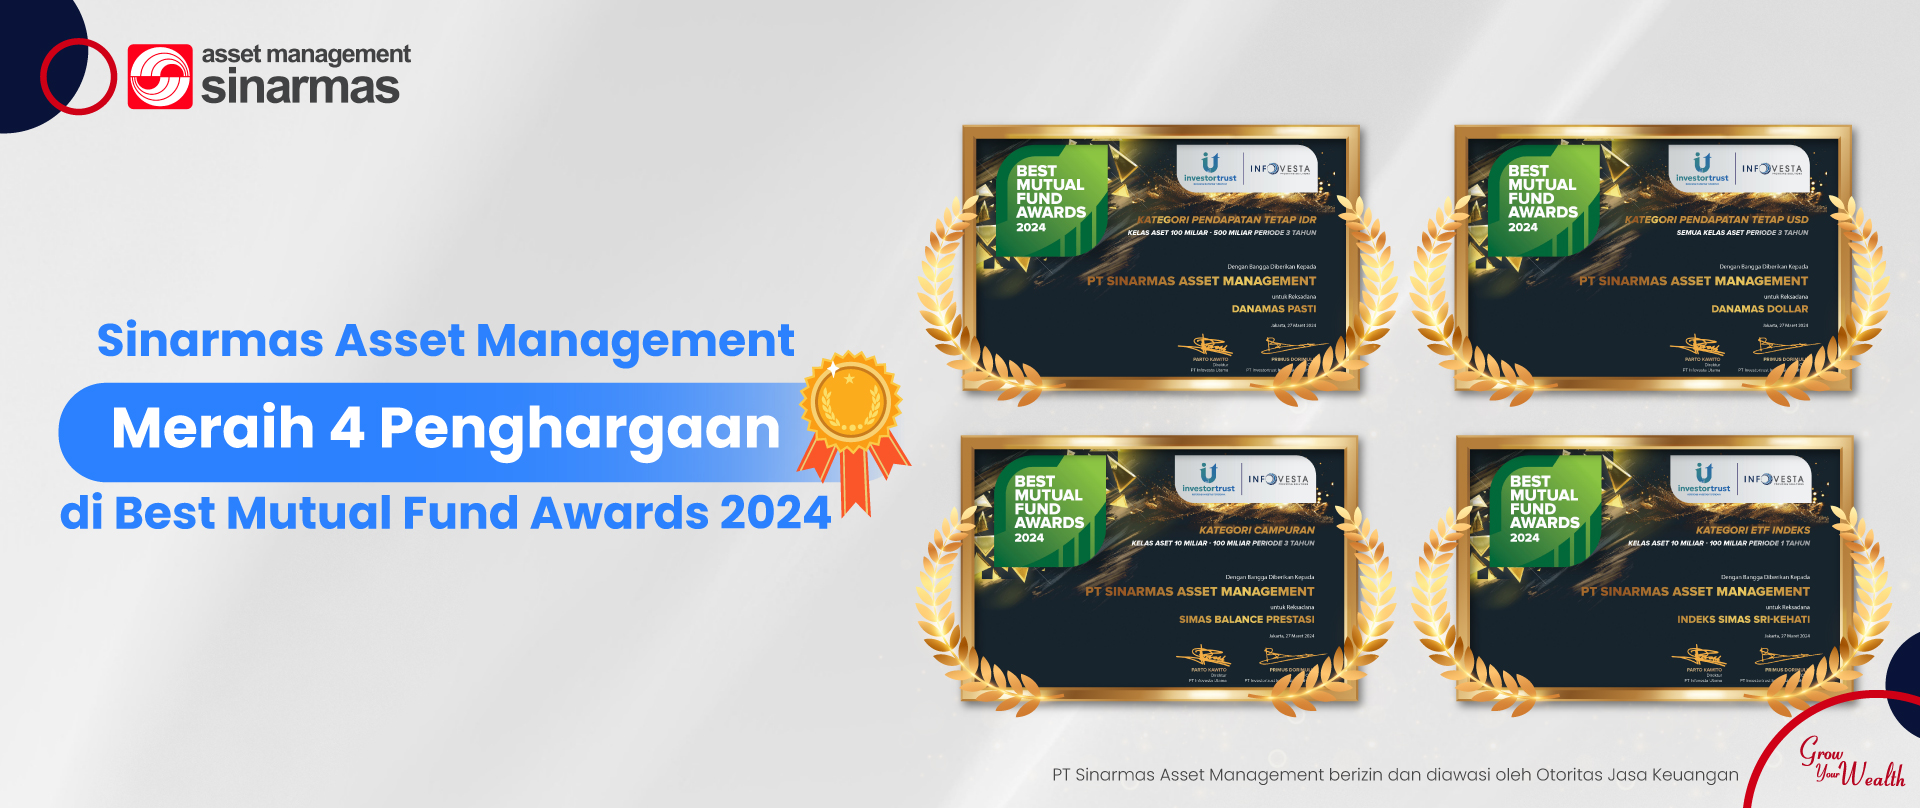 Sinarmas Asset Management Award 2024